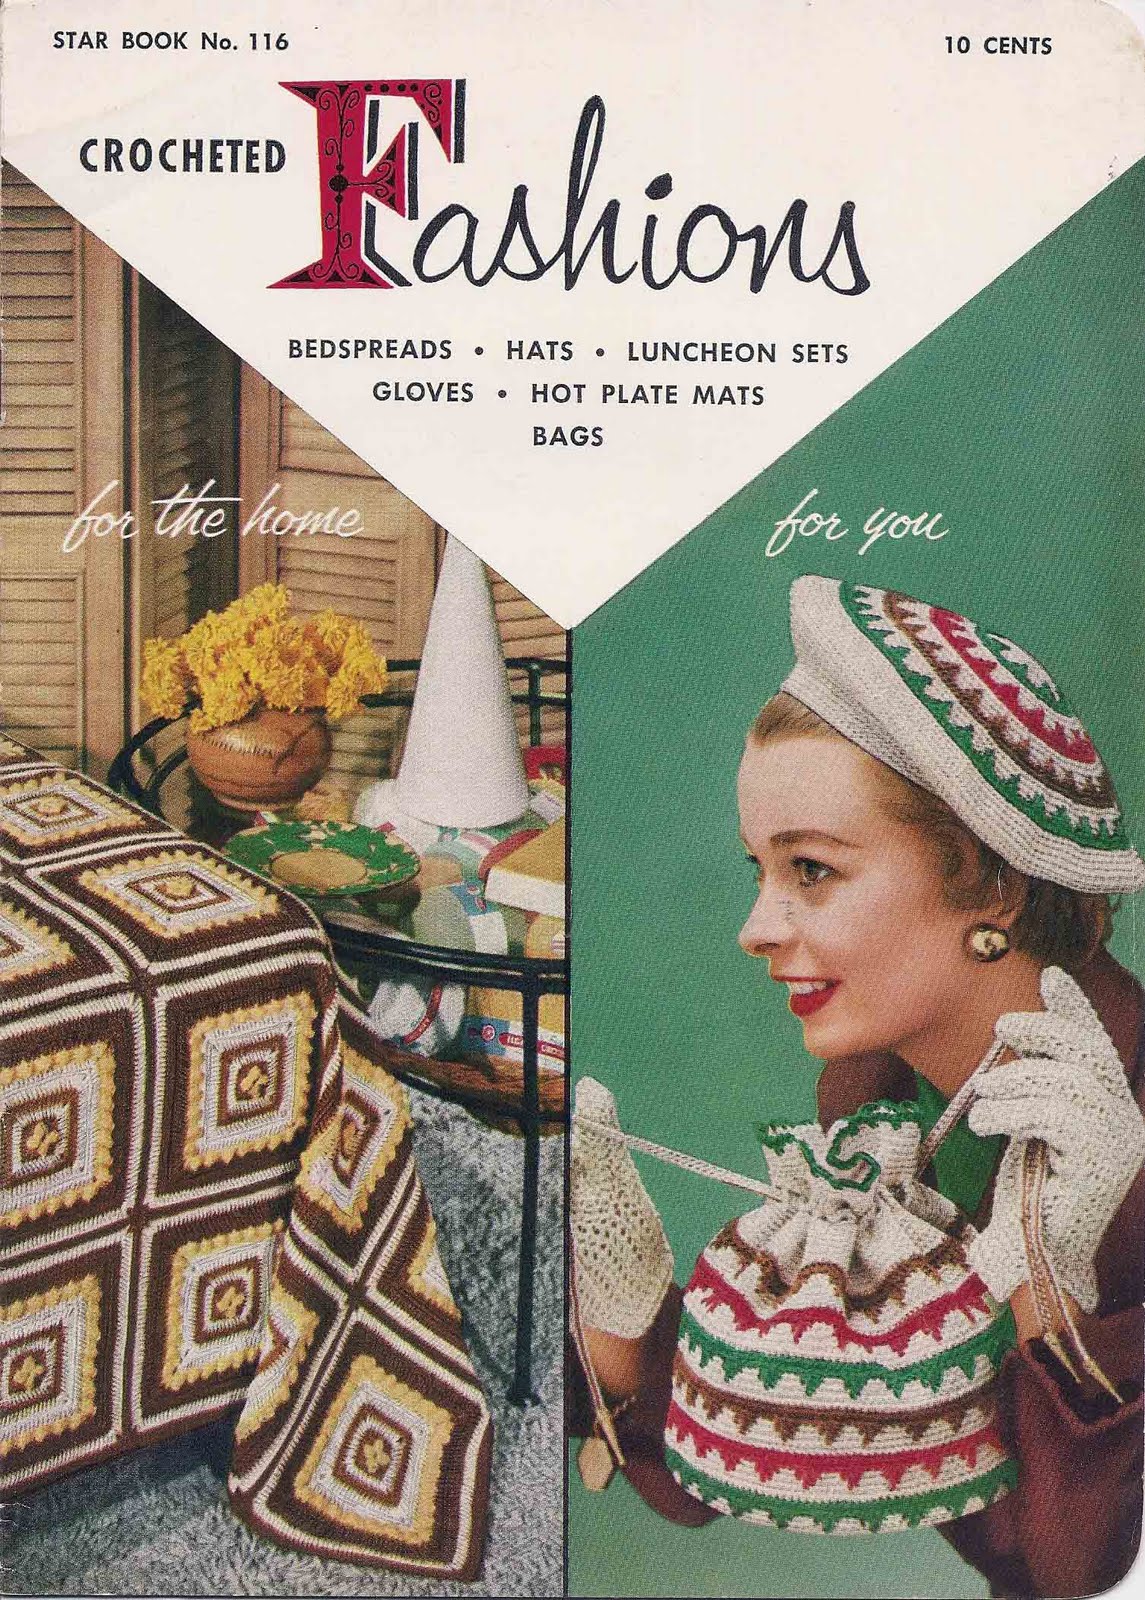 Crocheted Fashions Pattern Book